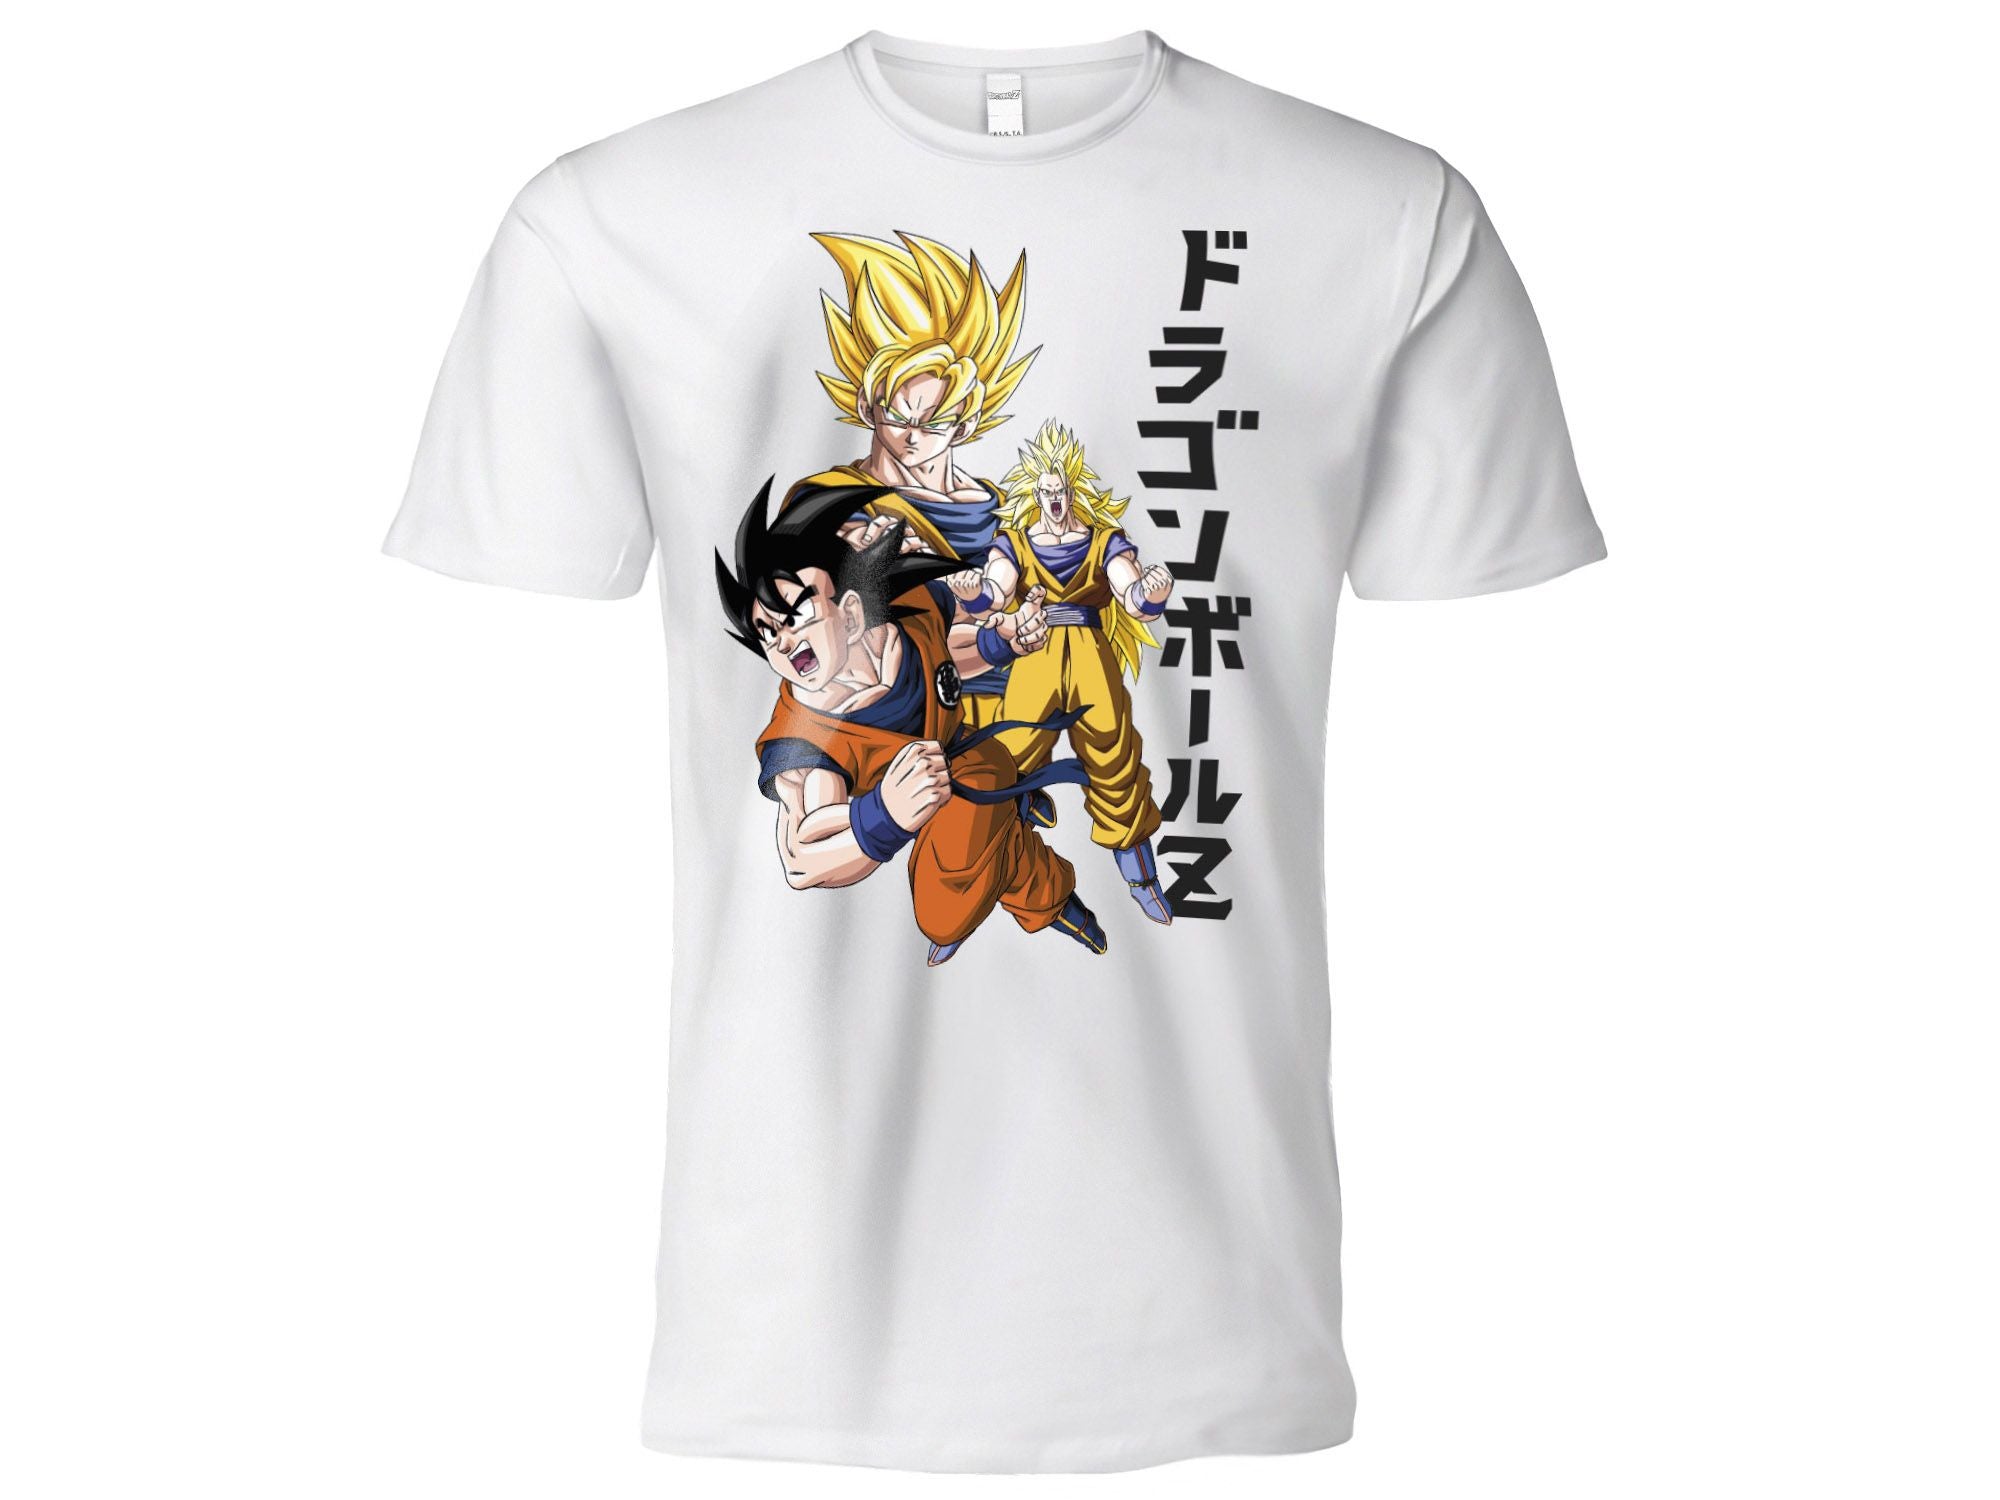 DRAGON BALL Z - T-Shirt Goku S.Saiyan livello 1-2-3 5-6 bianca - Disponibile in 2/3 giorni lavorativi